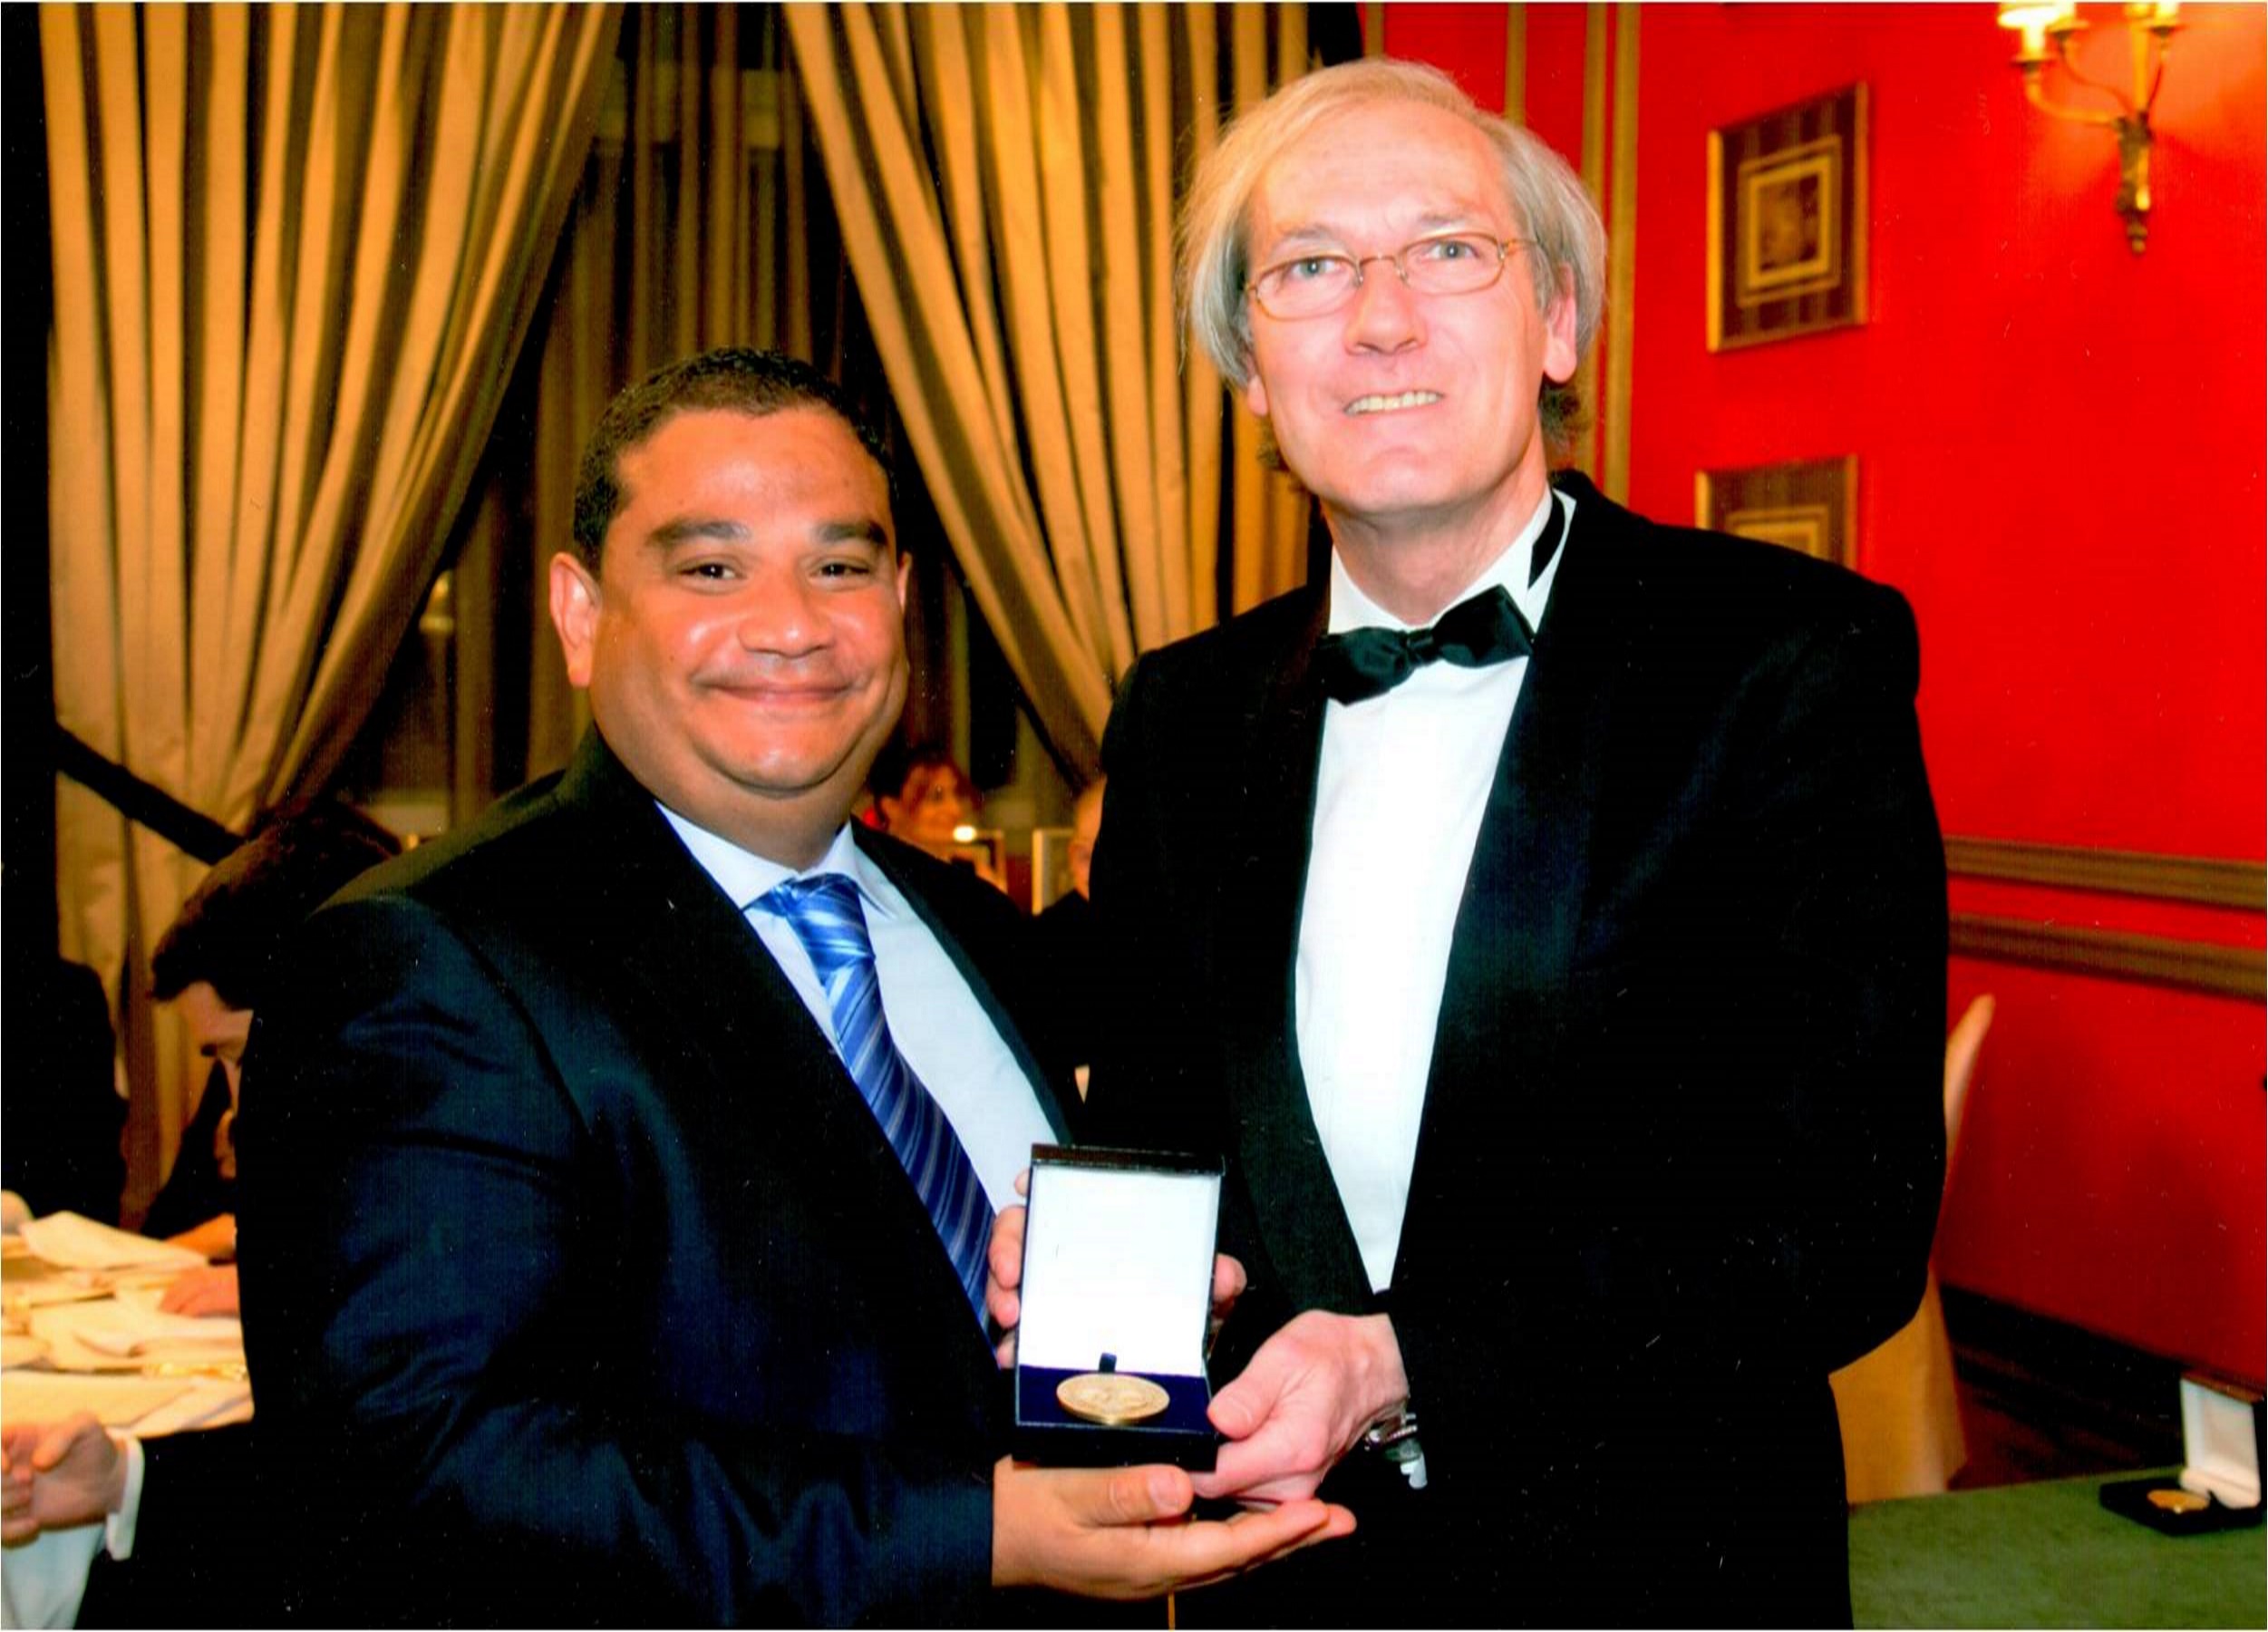 Entrega del Premio Foro Europa 2001 al abogado Alejandro Montero Zamora.